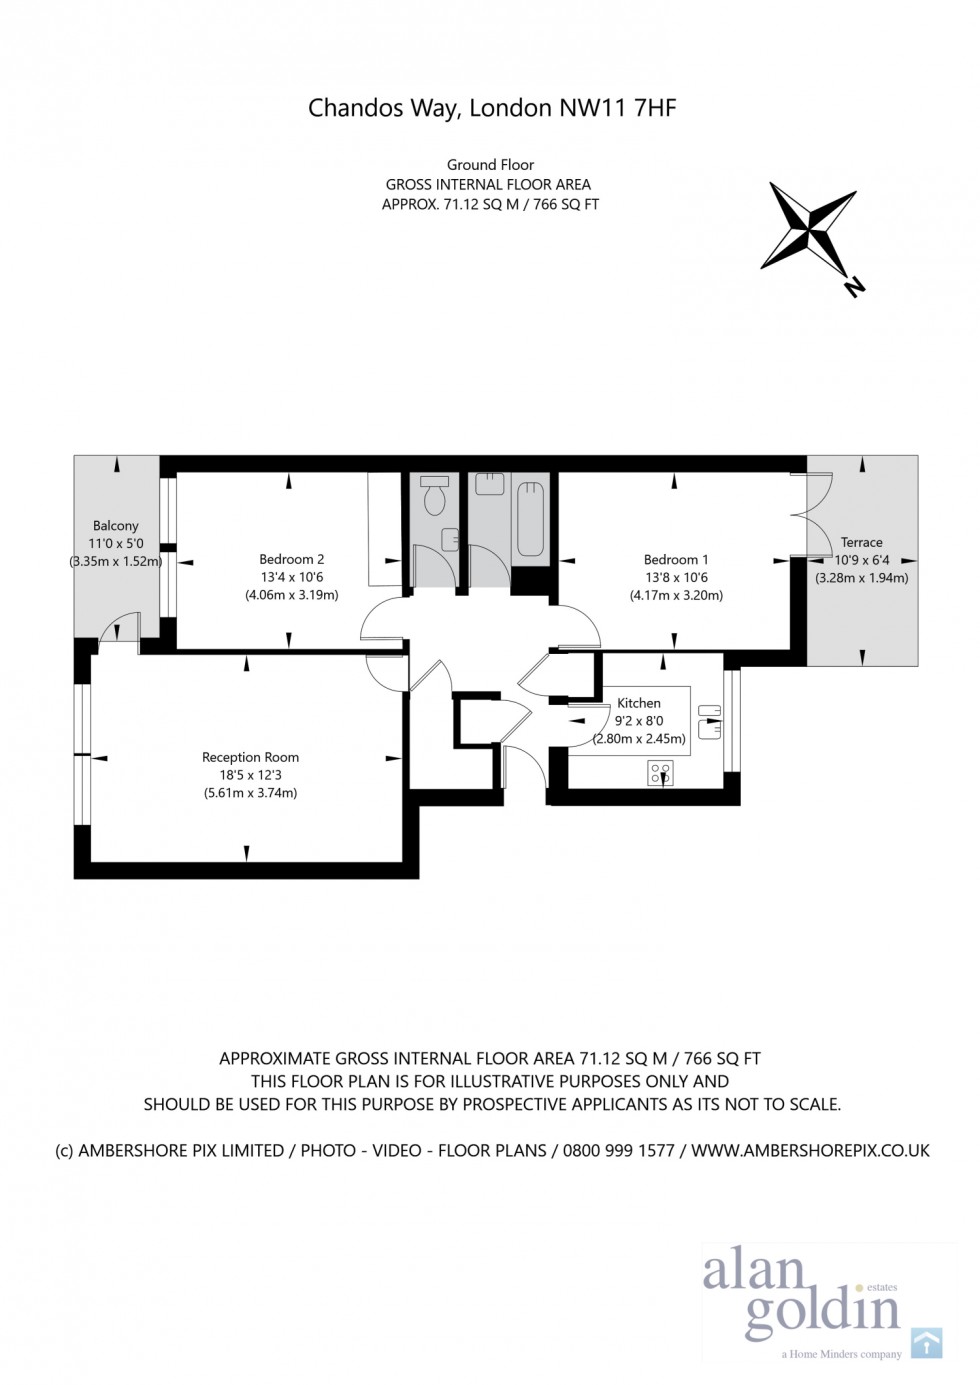 Floorplan for Chandos Way, NW11